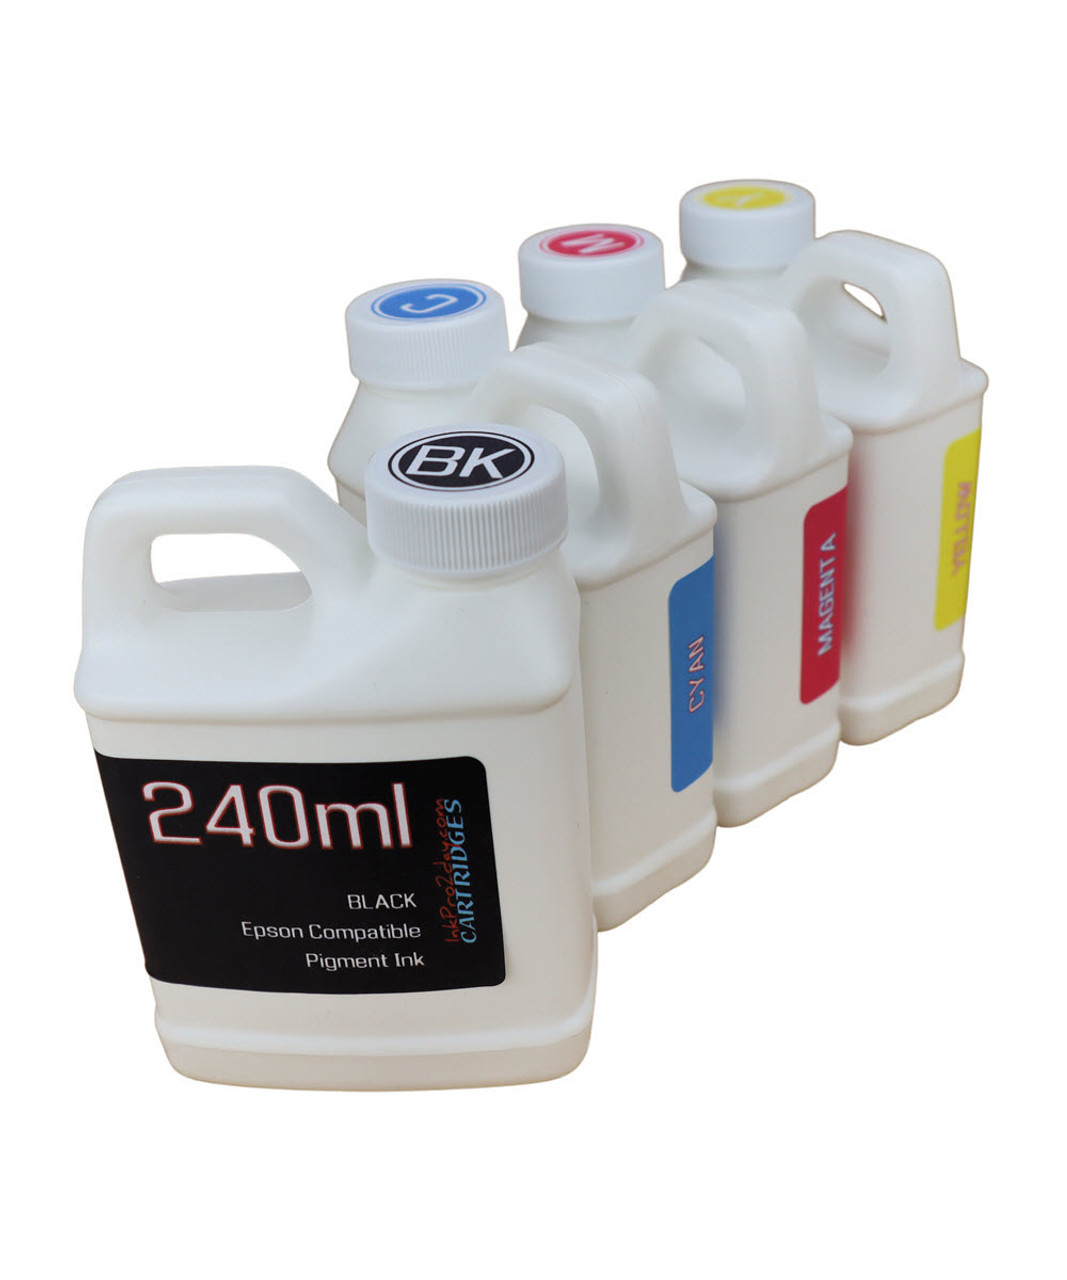 EPSON WorkForce ET-4500 EcoTank Printer 4 Color Package 240ml Pigment Bottle Ink 